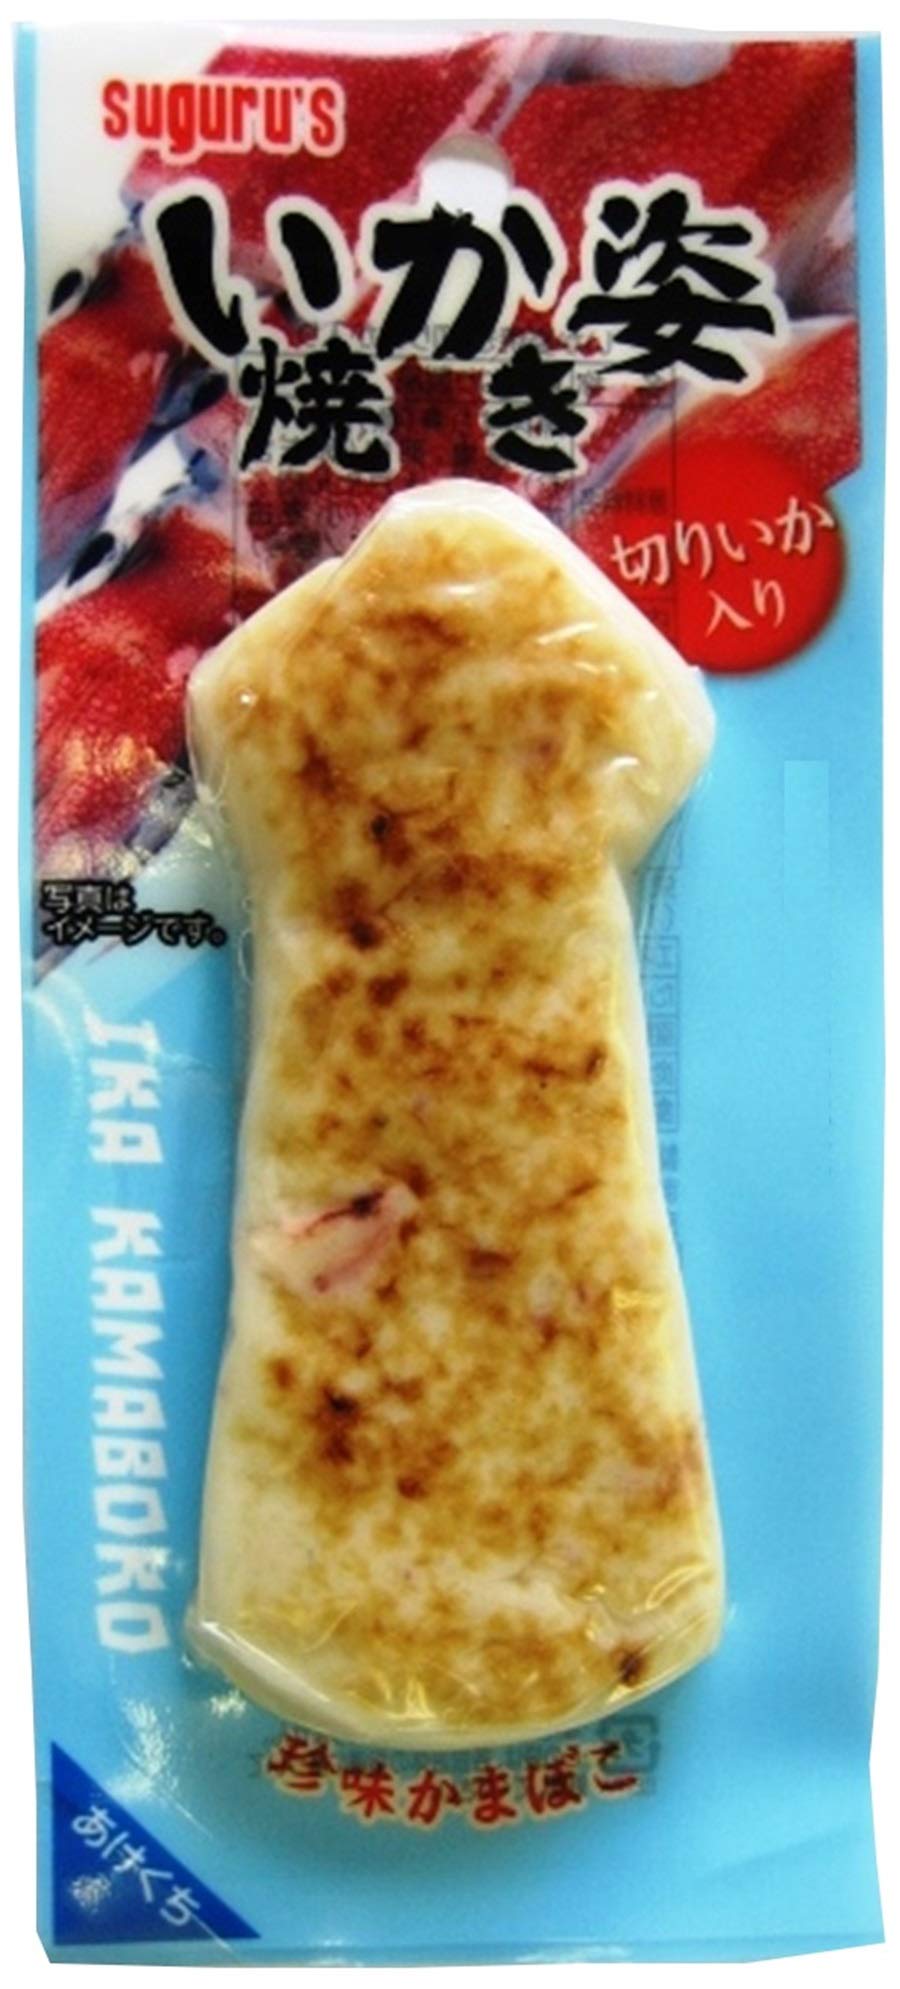 Suguru food squid figure grilled squid cut into one X10 bag